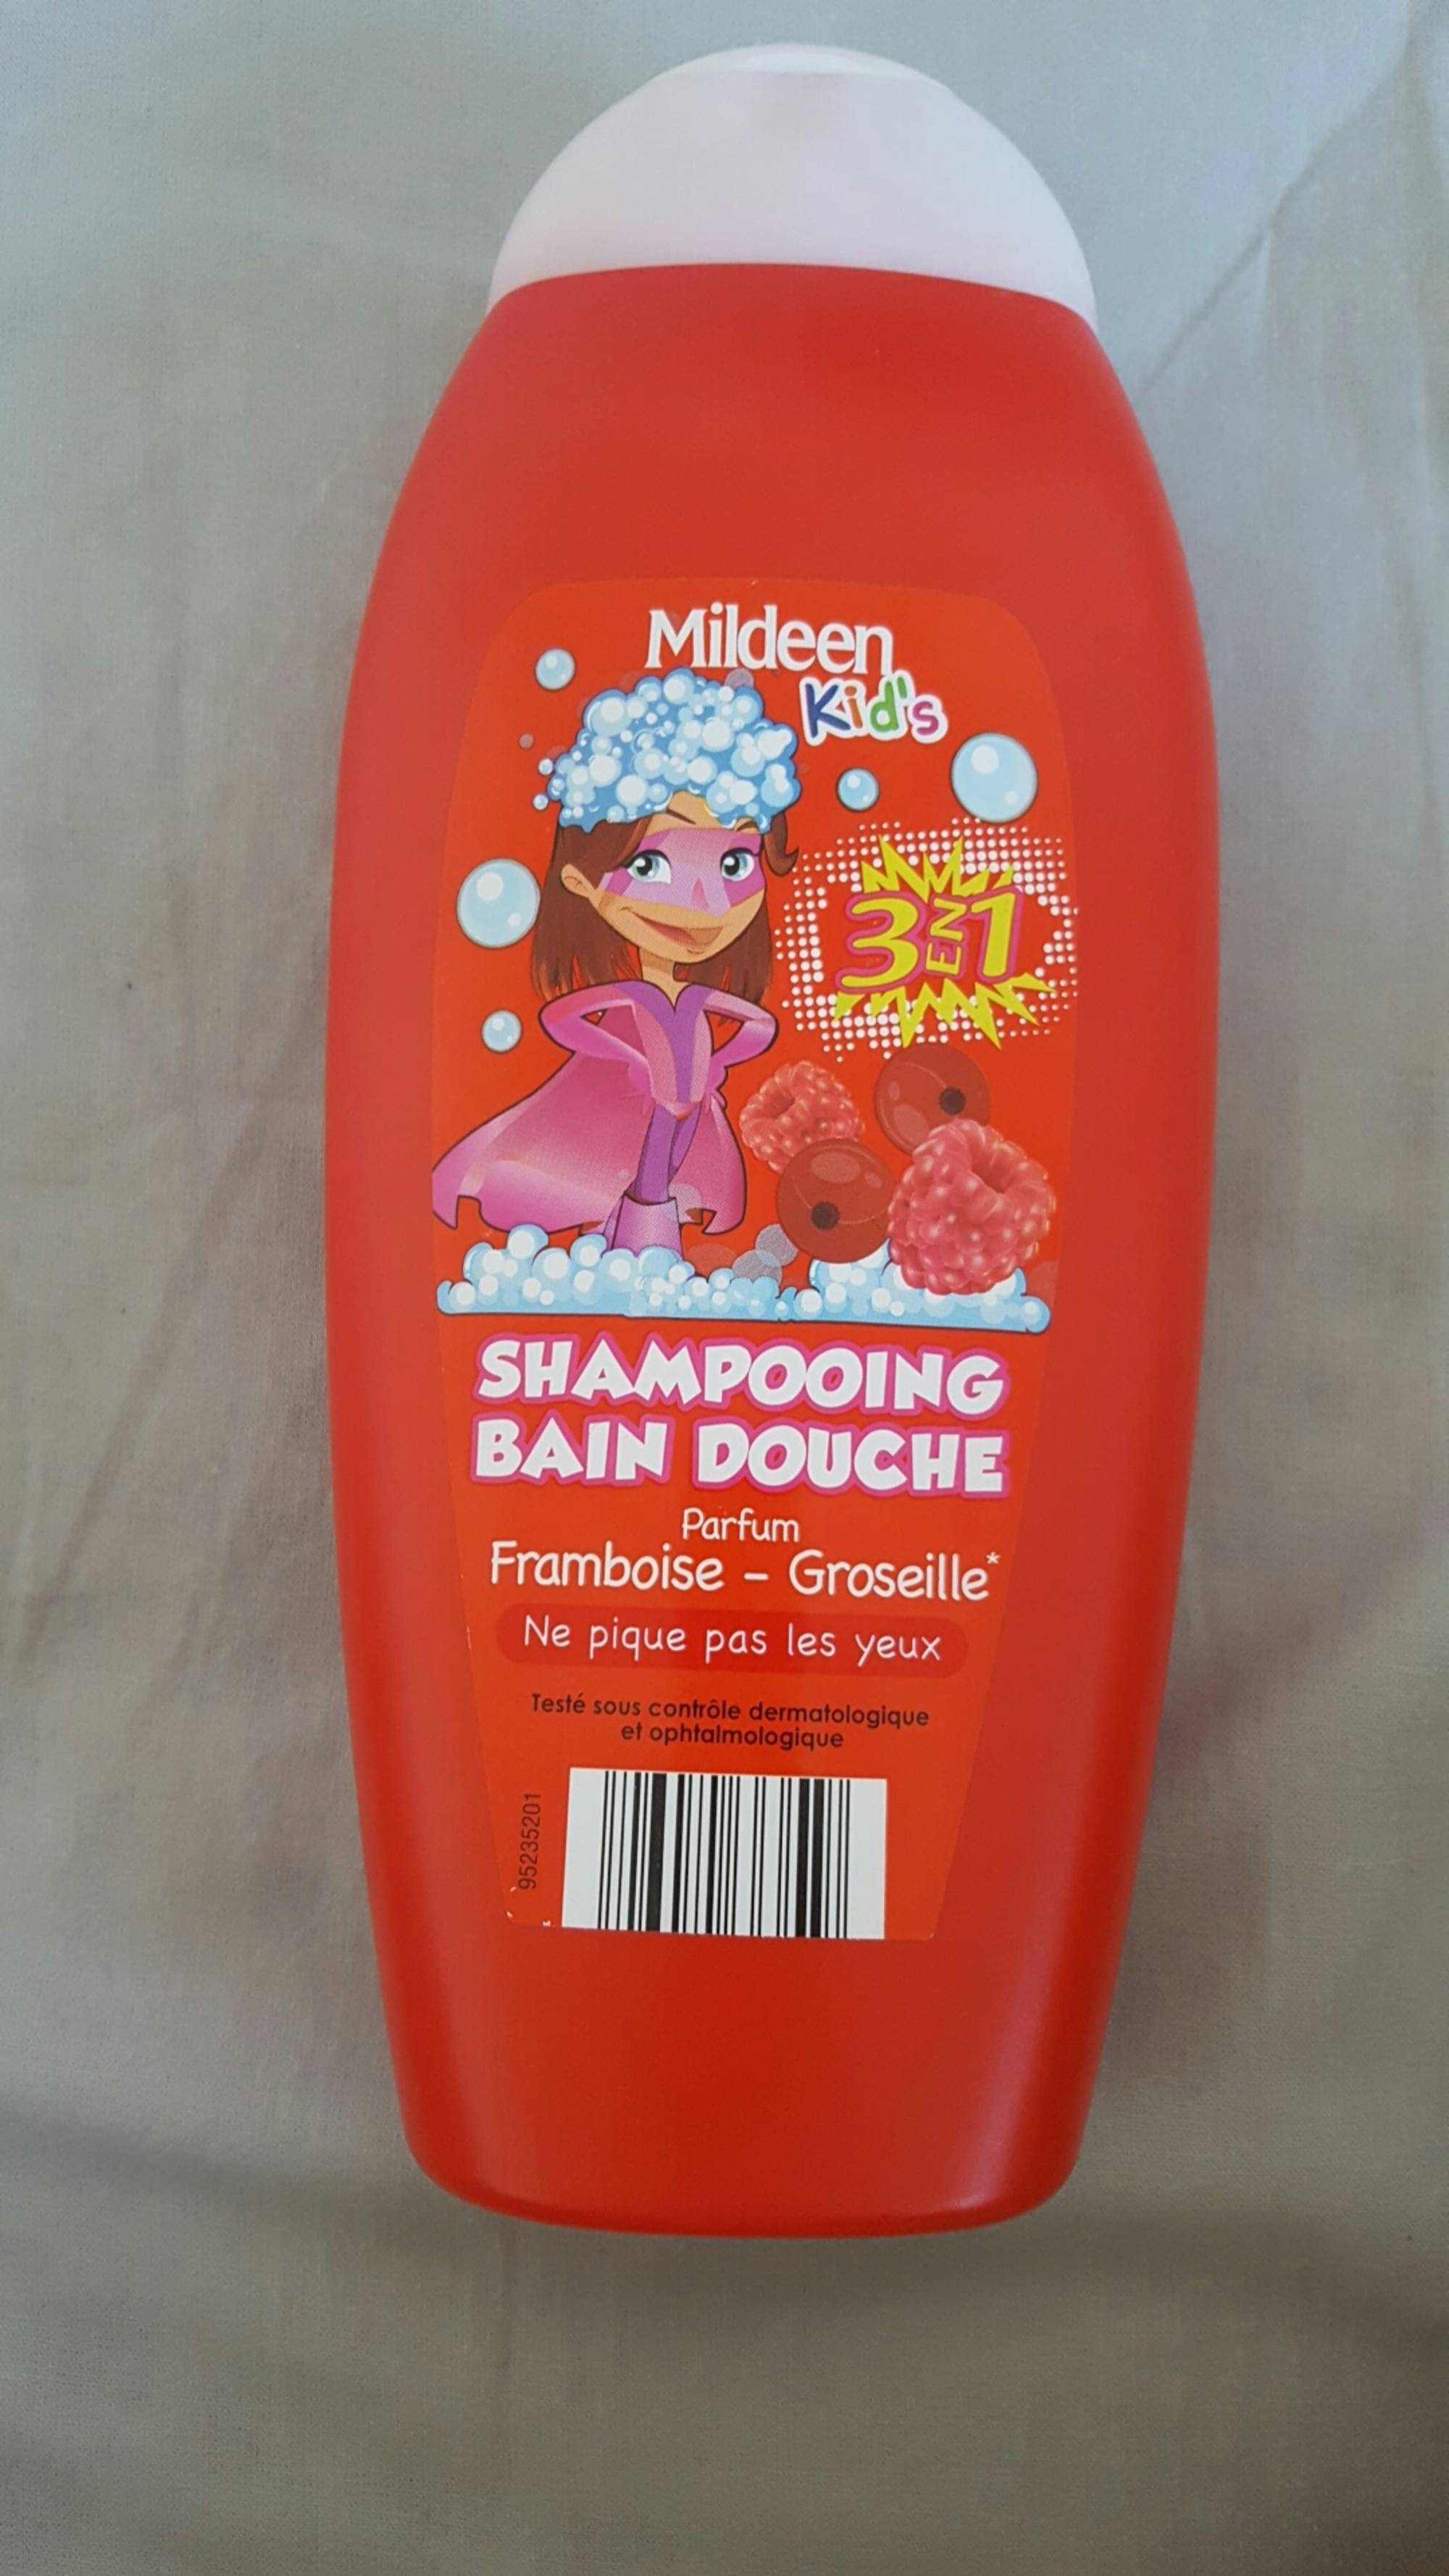 MILDEEN KID'S - Shampooing bain douche parfum framboise - Groseille